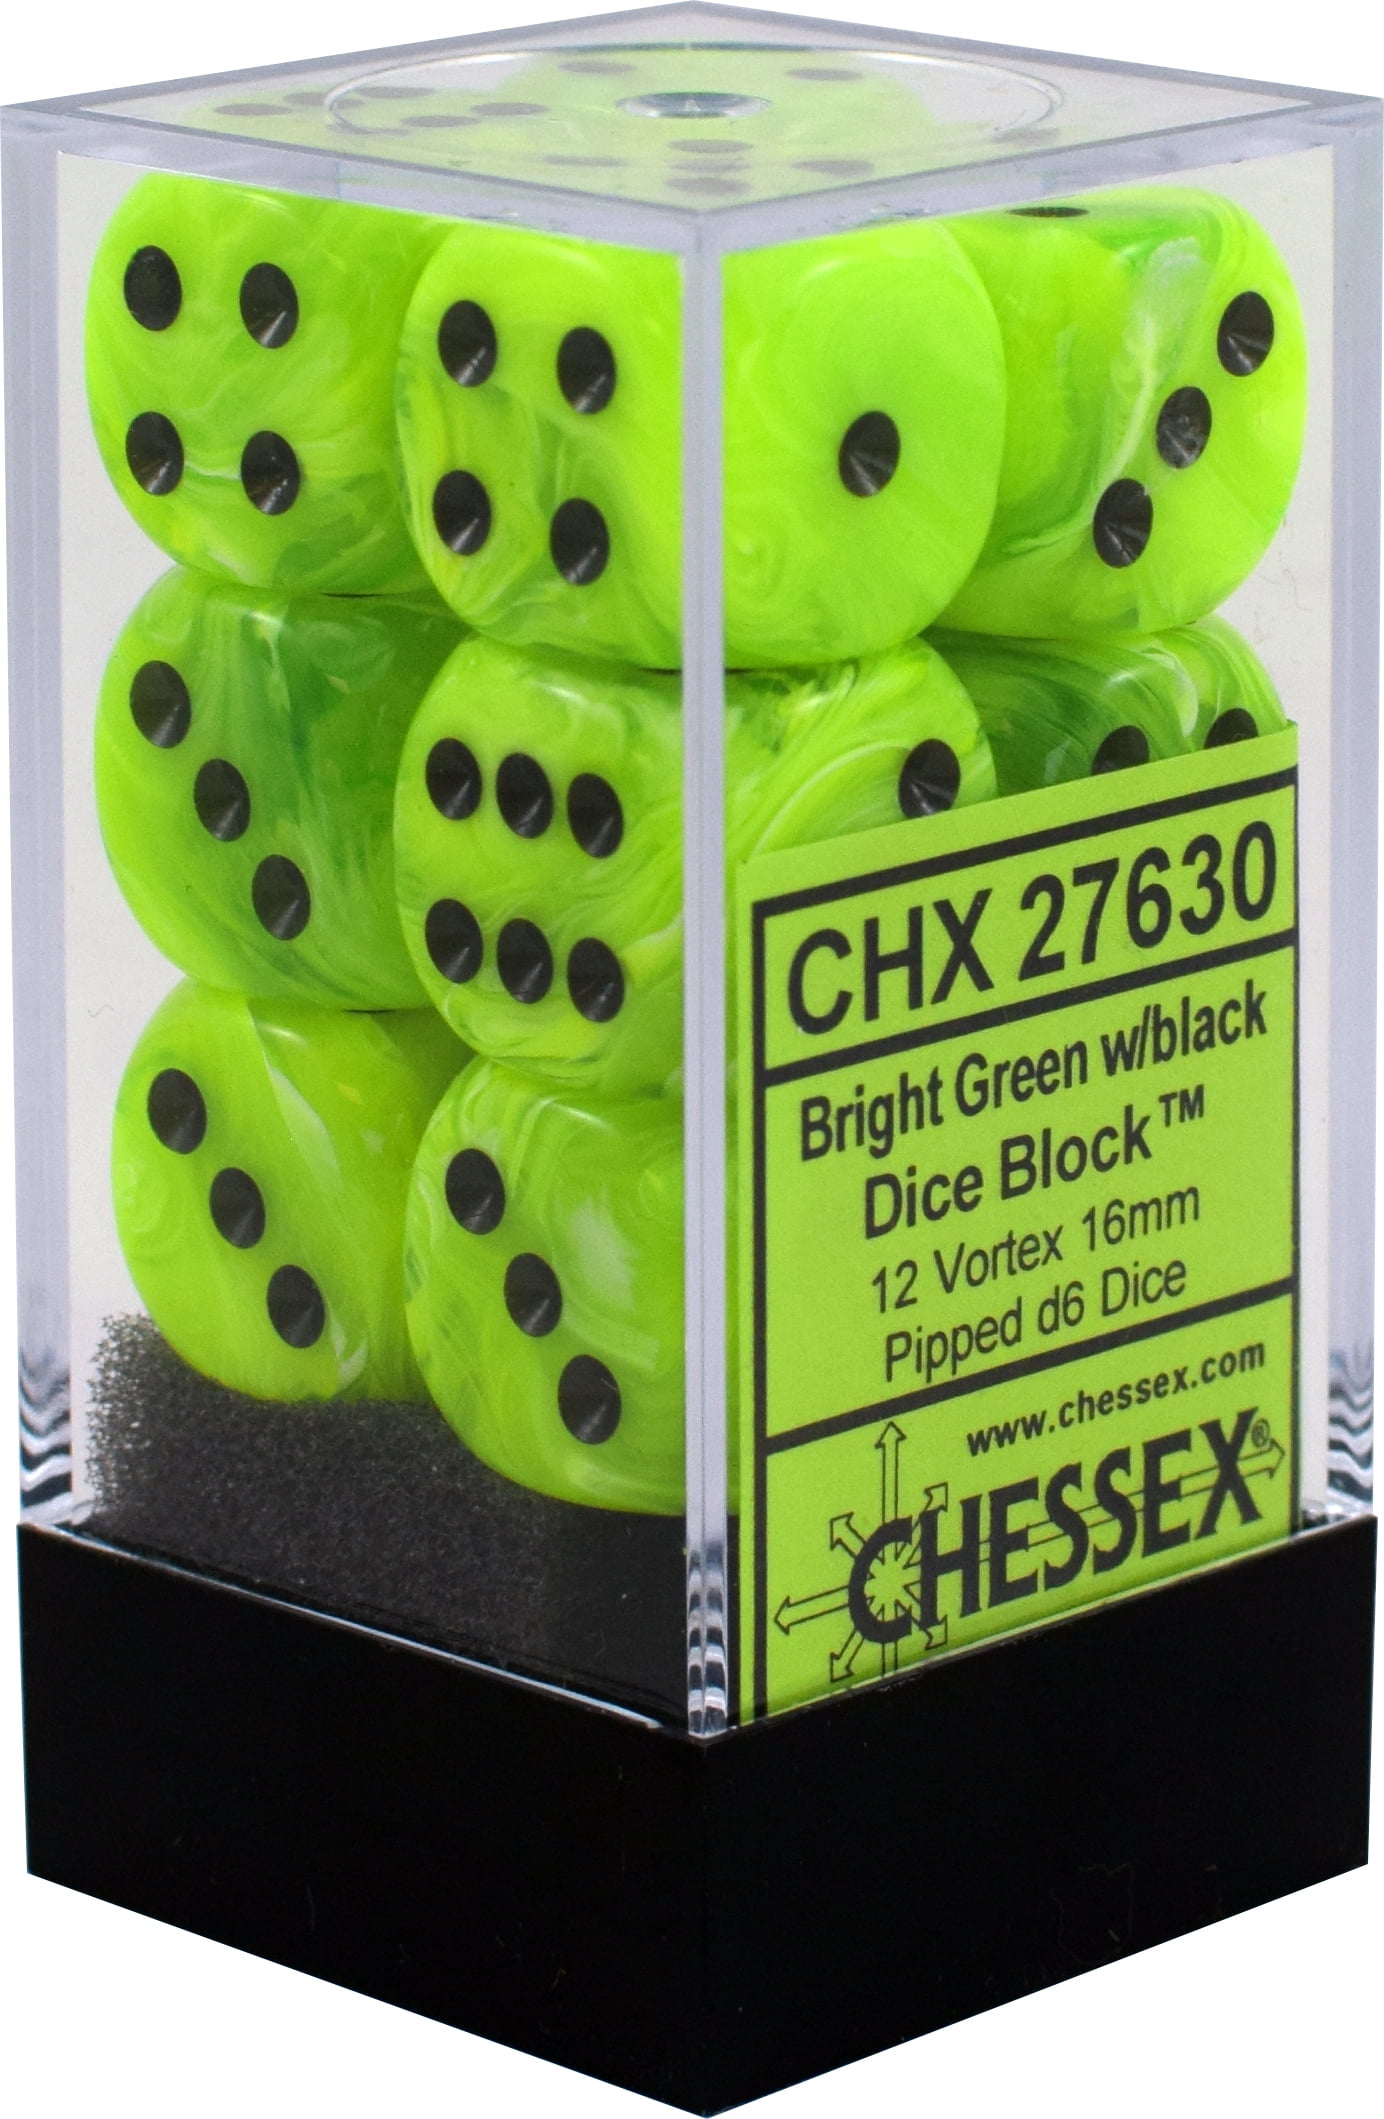 Chessex Vortex Bright green w6 16mm cubo set chx27630 